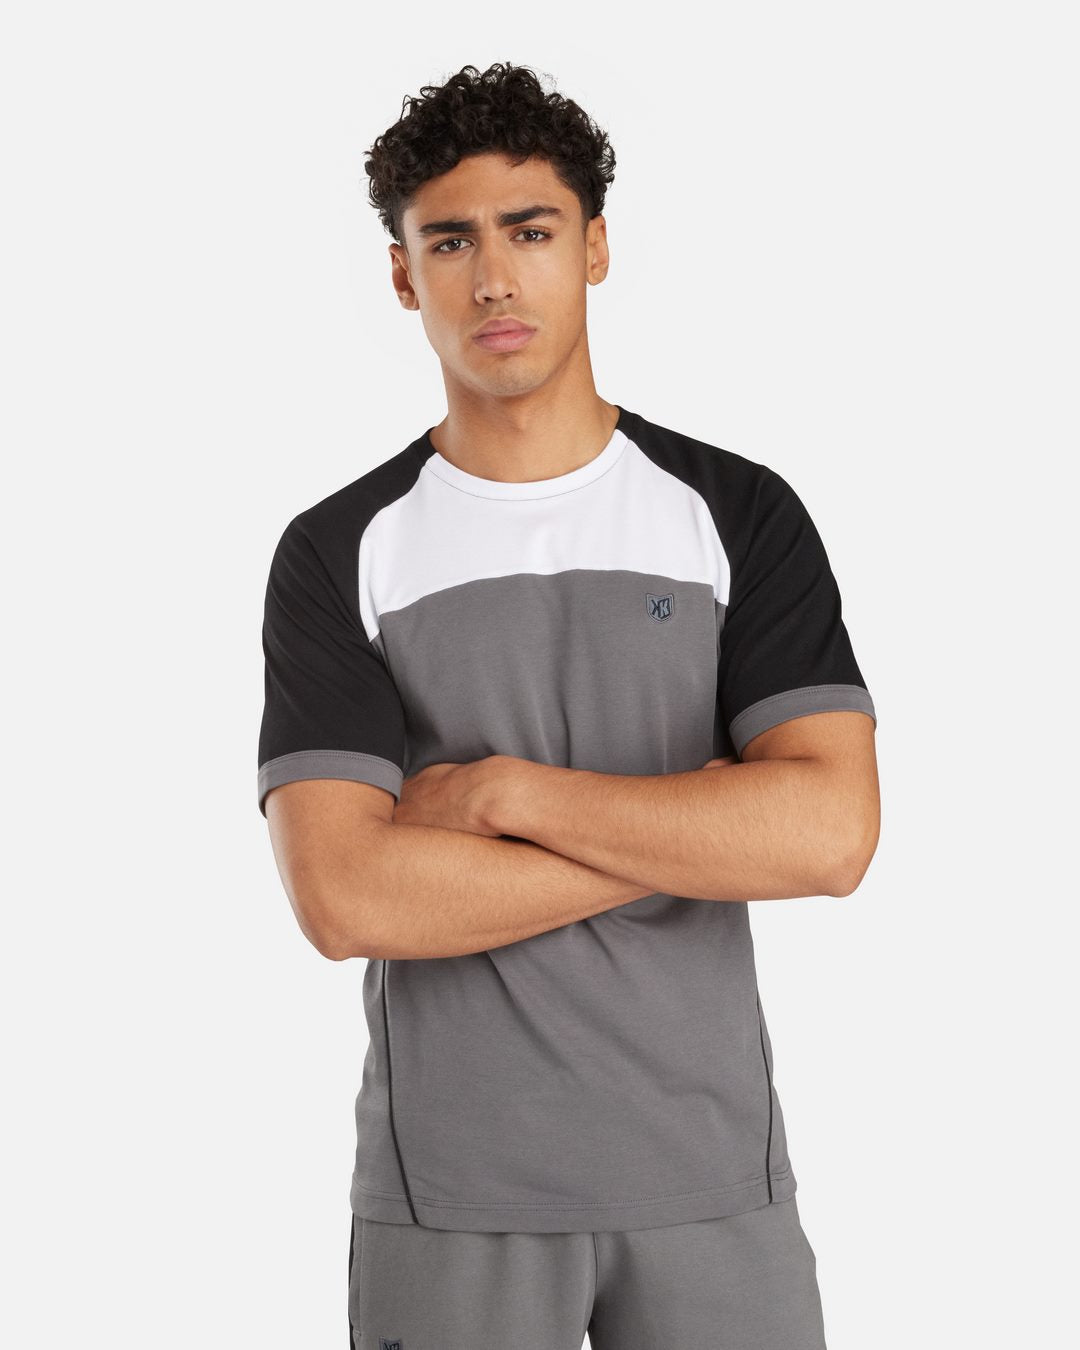 FK Sicarios VI T-shirt - Grey/Black/White